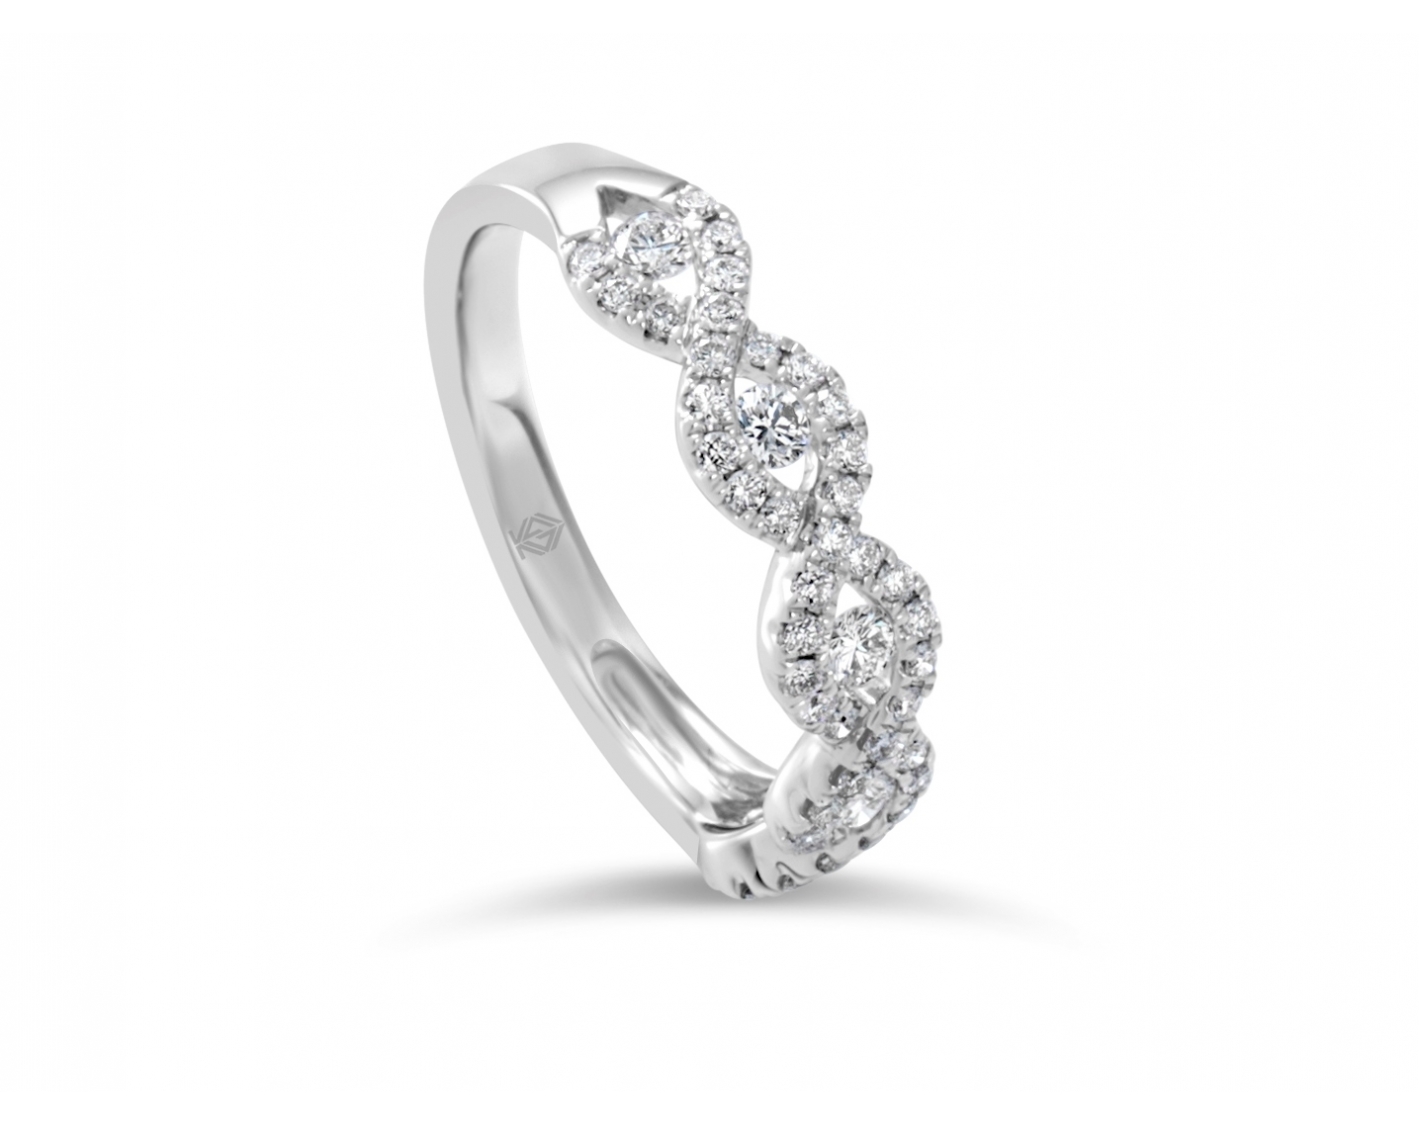 18k rose gold half eternity infinity halo and pave set round brilliant diamond wedding ring Photos & images